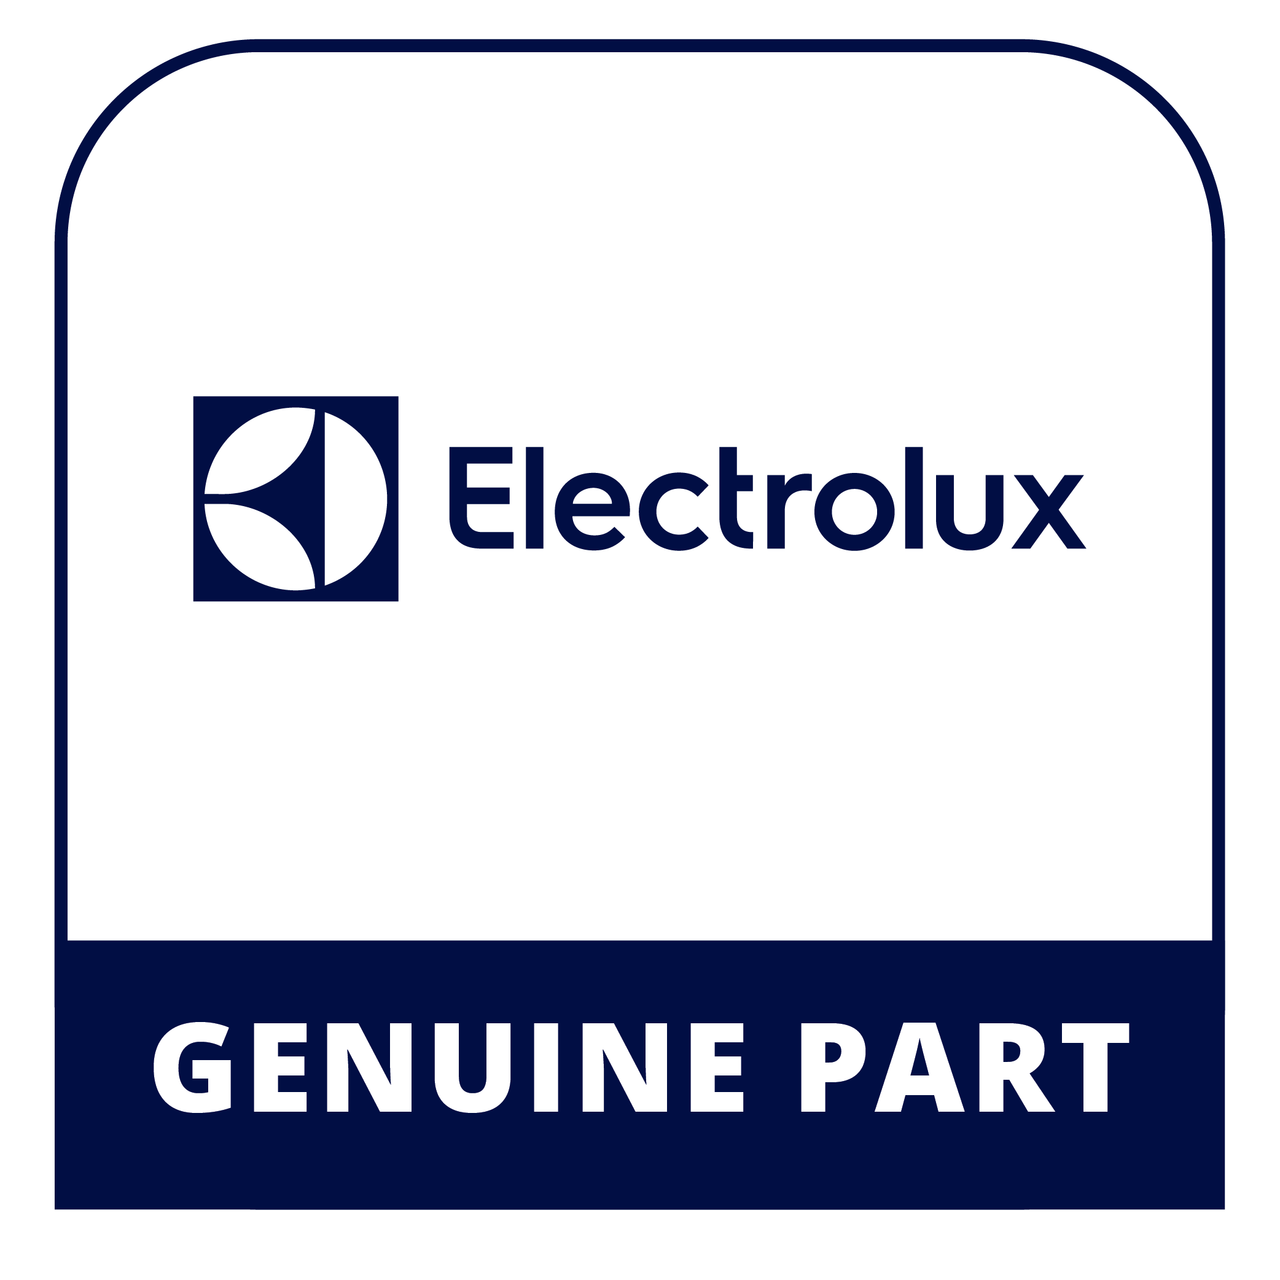 Frigidaire - Electrolux 241987961 Dsp Fzdrawer - Genuine Electrolux Part